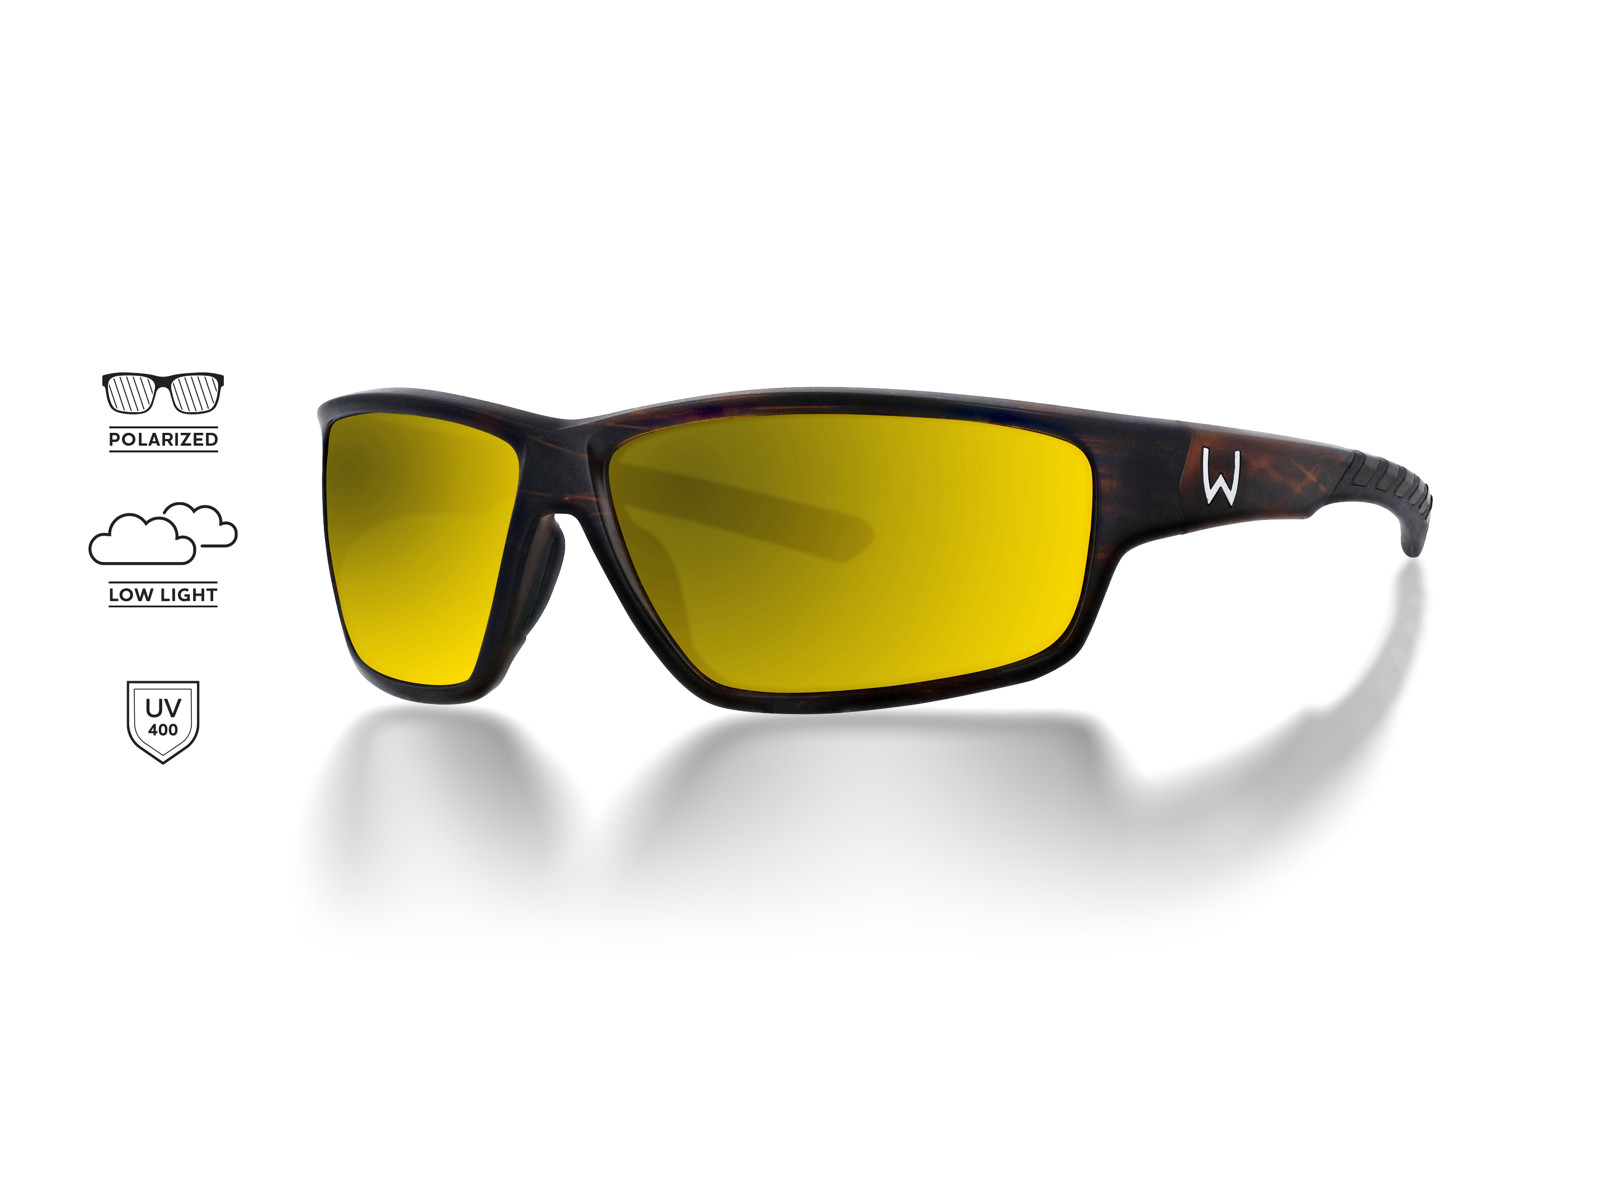 Occhiali polar Smith Optics Castaway CP Glass Matte Black Polarized  Sunglasses, low light yellow, pesca a mosca